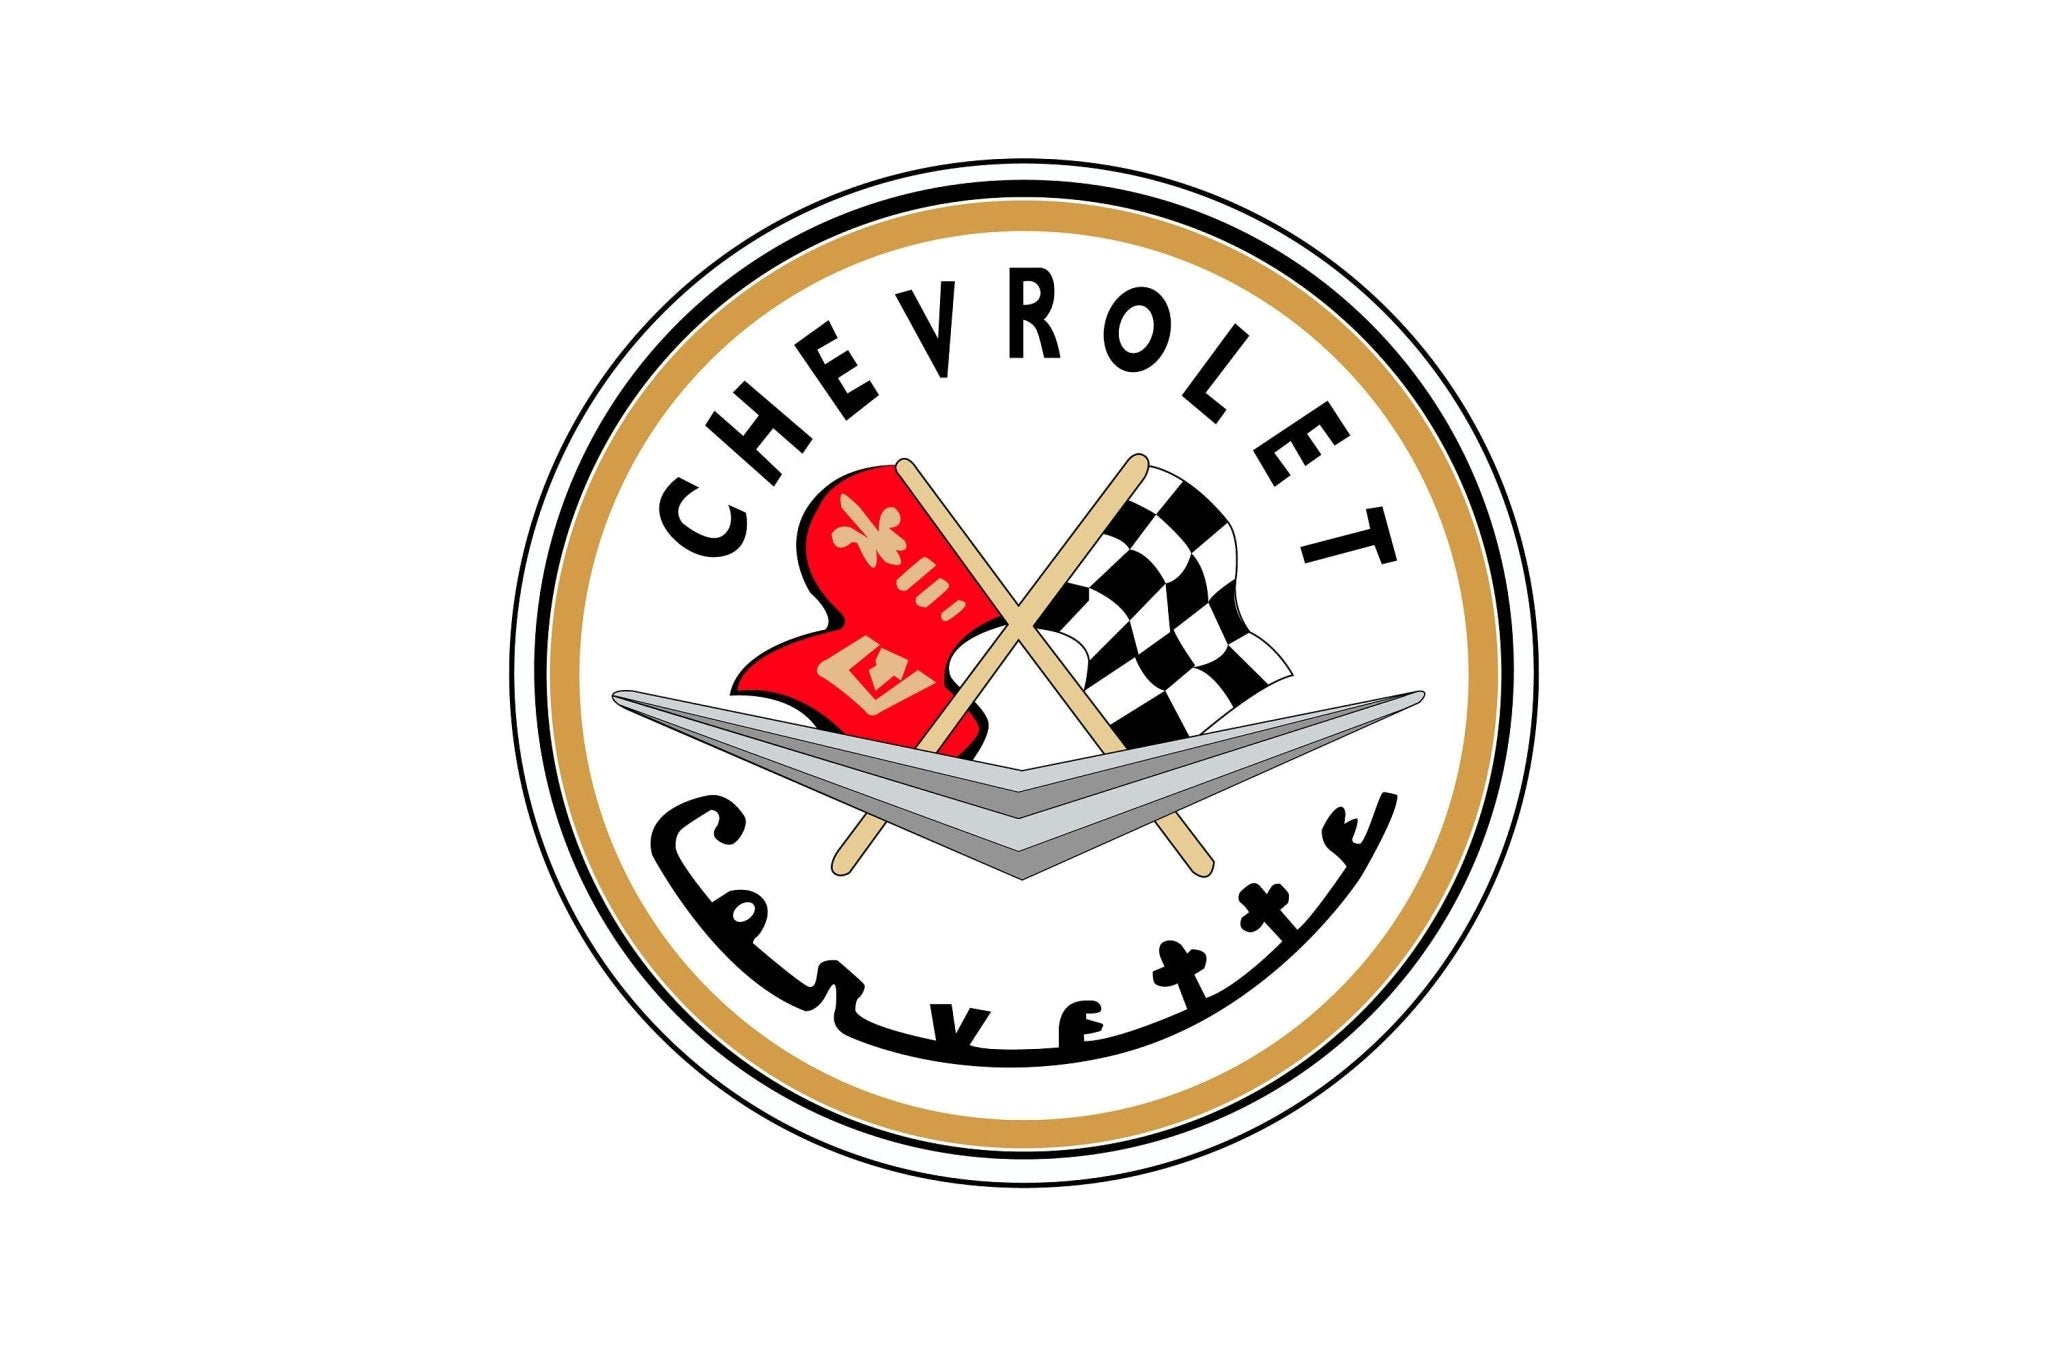 Corvette C1 Logo with Chevron Instant Download, Vector, Car, Emblem, SVG, Cut File, Print, Digital, Scrapbooking, Cameo, Cricut - Vette1 - C1 Downloads